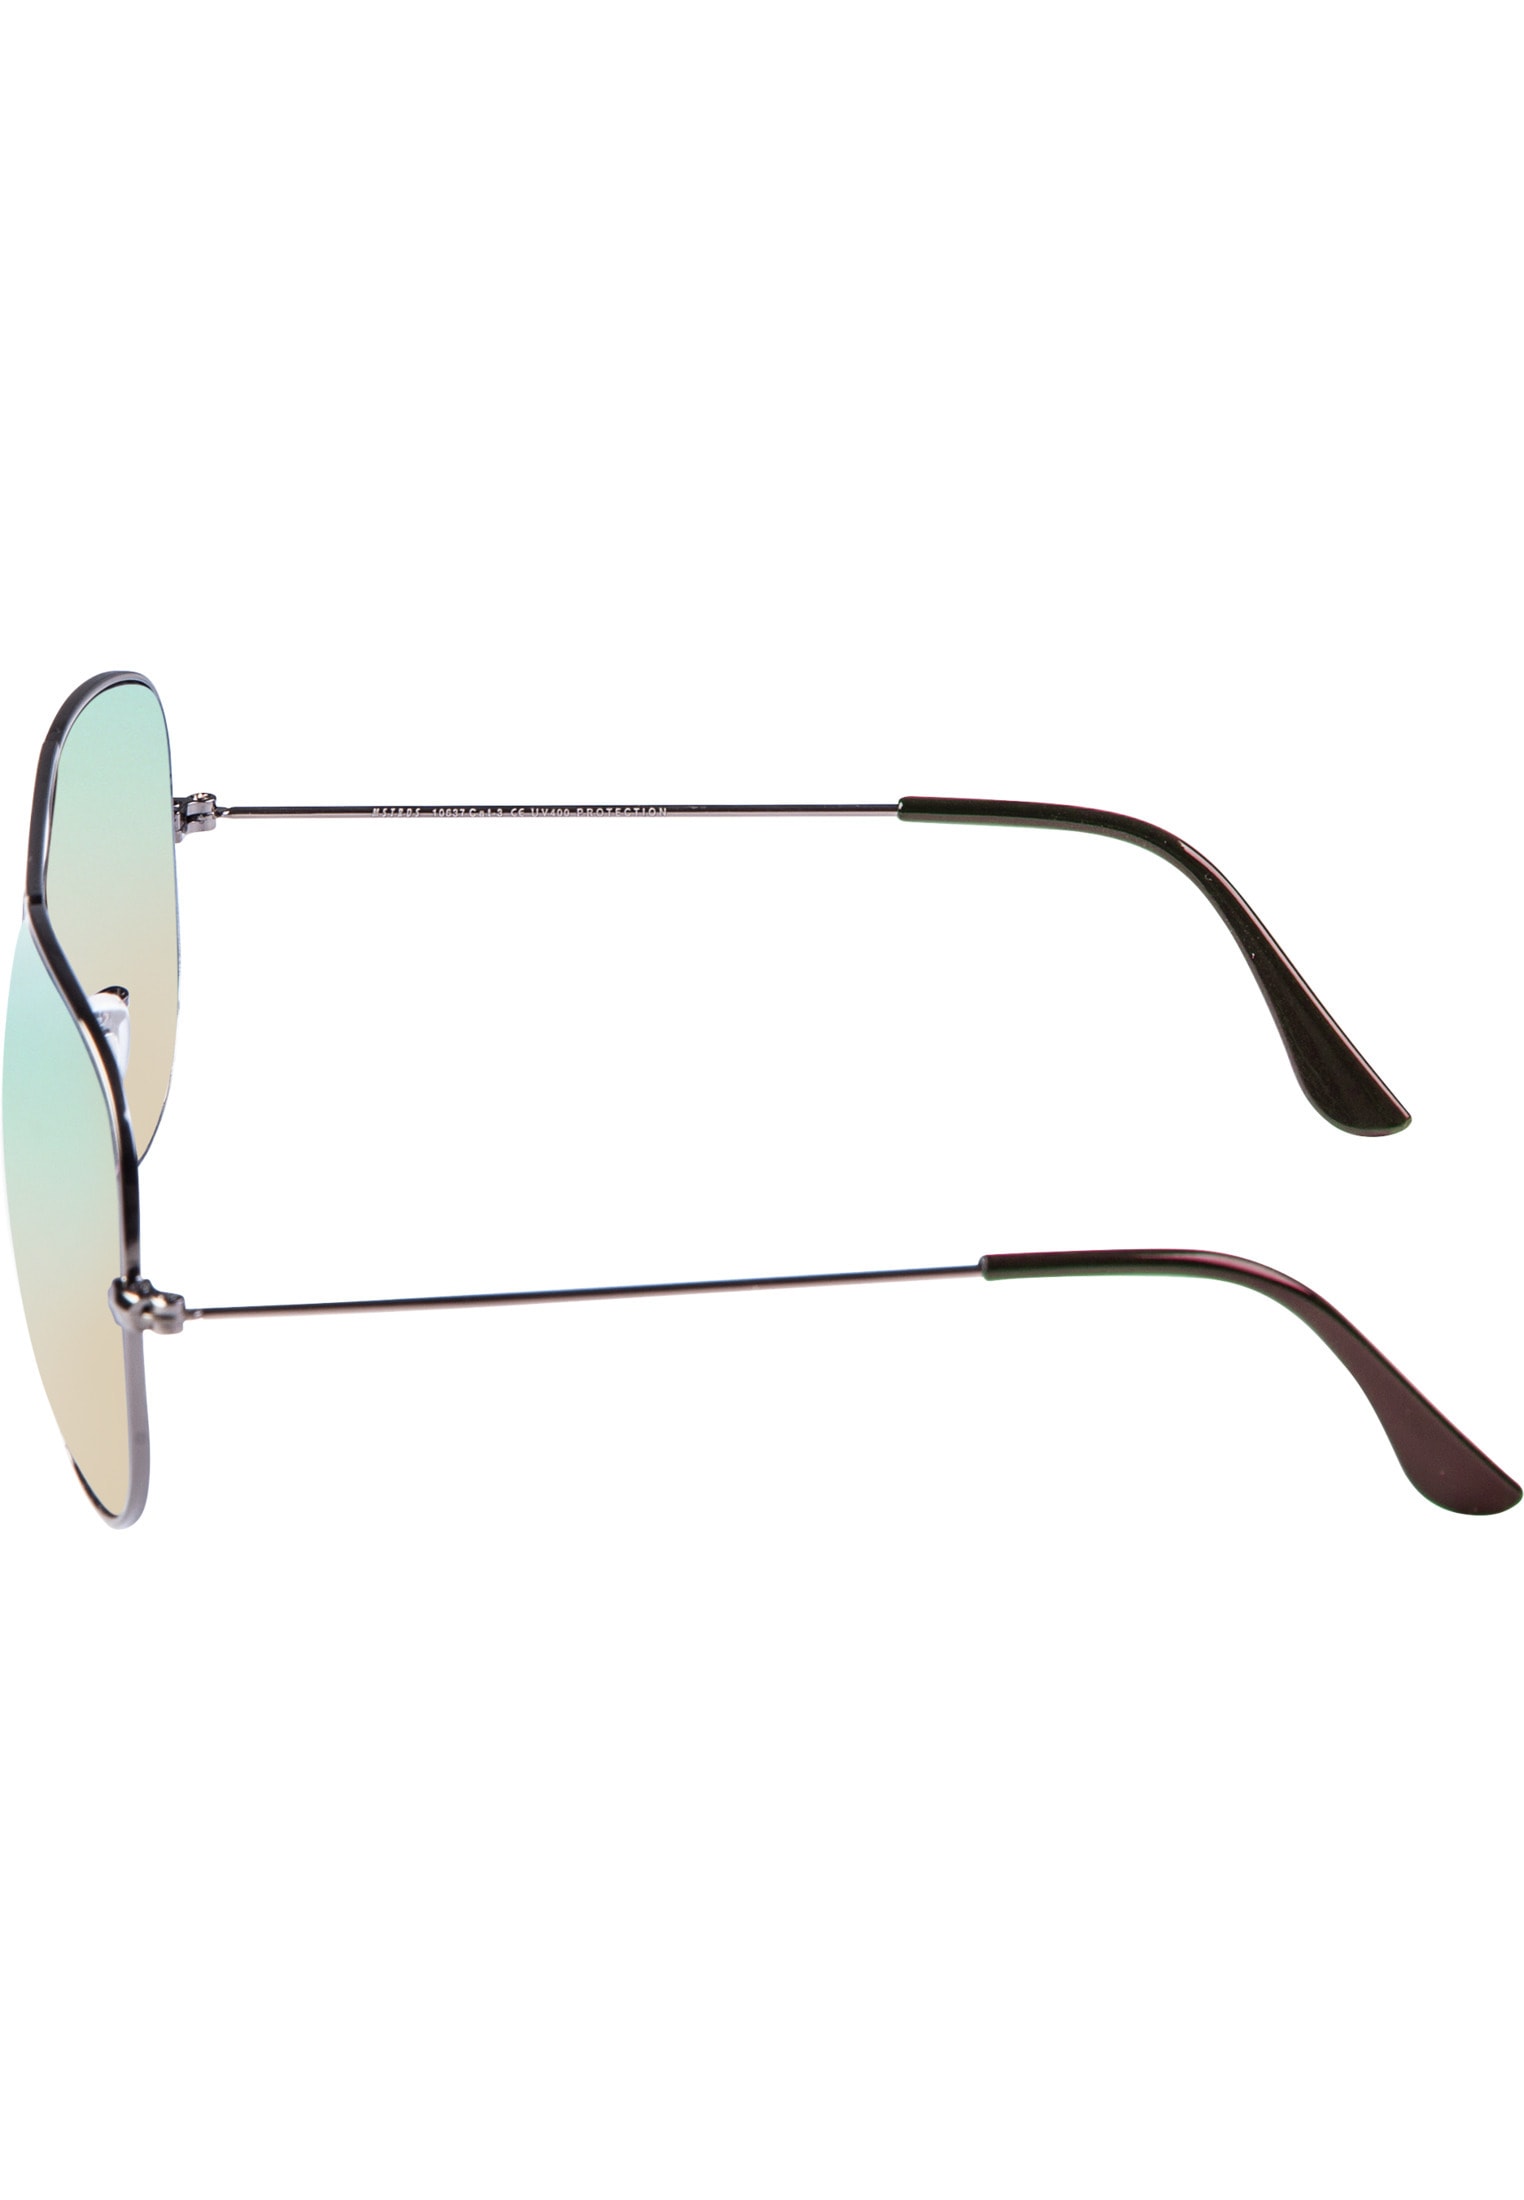 Black Friday Sunglasses | Sonnenbrille PureAv BAUR MSTRDS »Accessoires Youth«